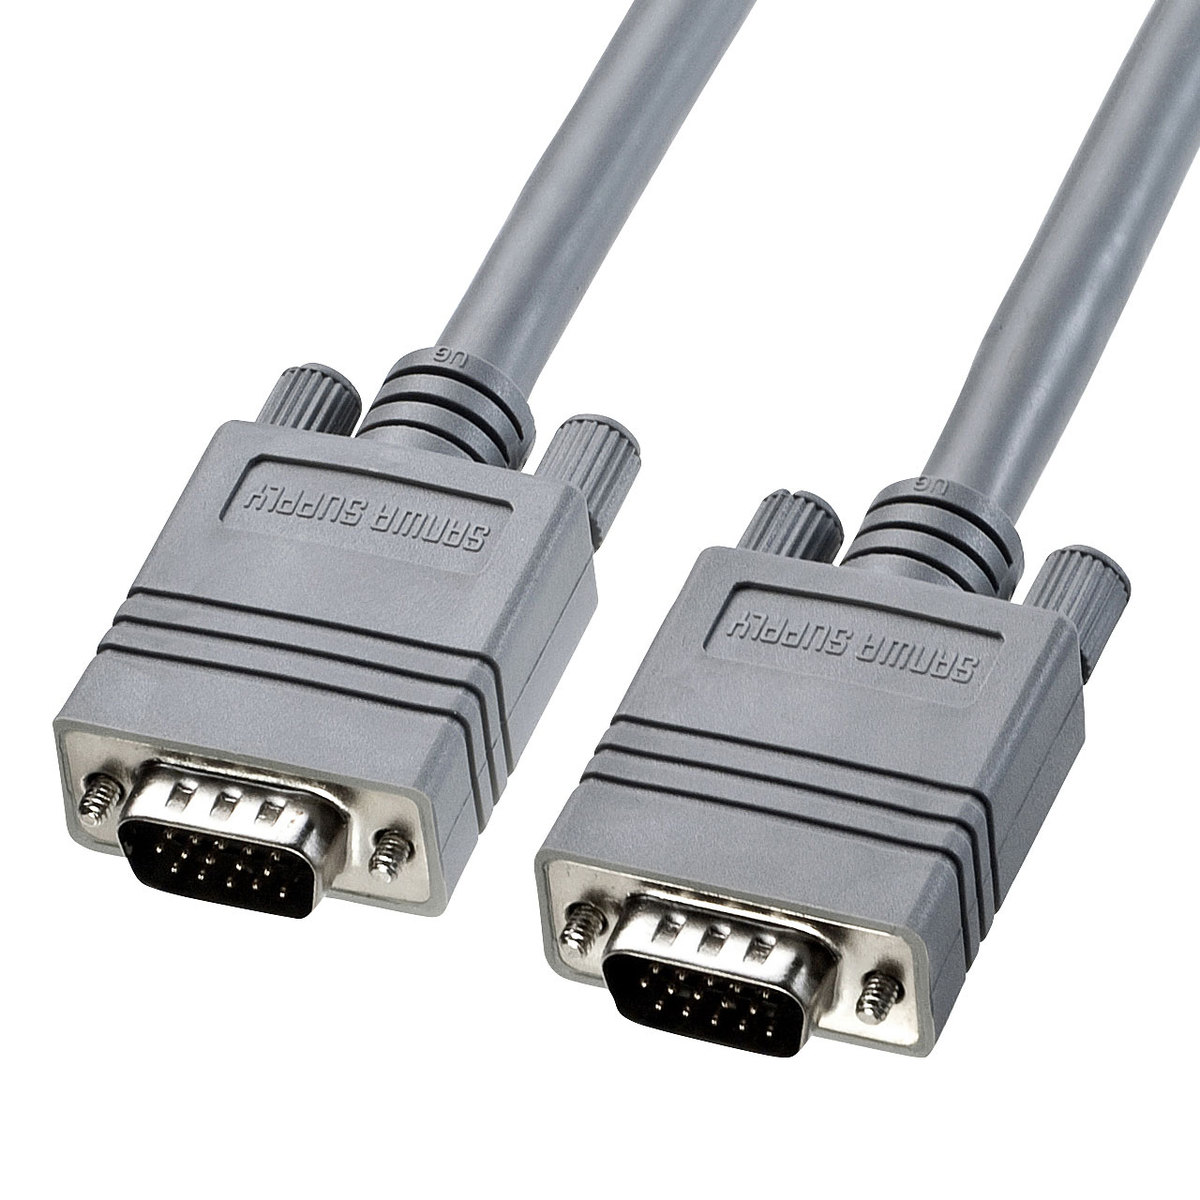 Display Cable (Compound Coaxial / Analog RGB), KB-CHD Series KB-CHD1515K2